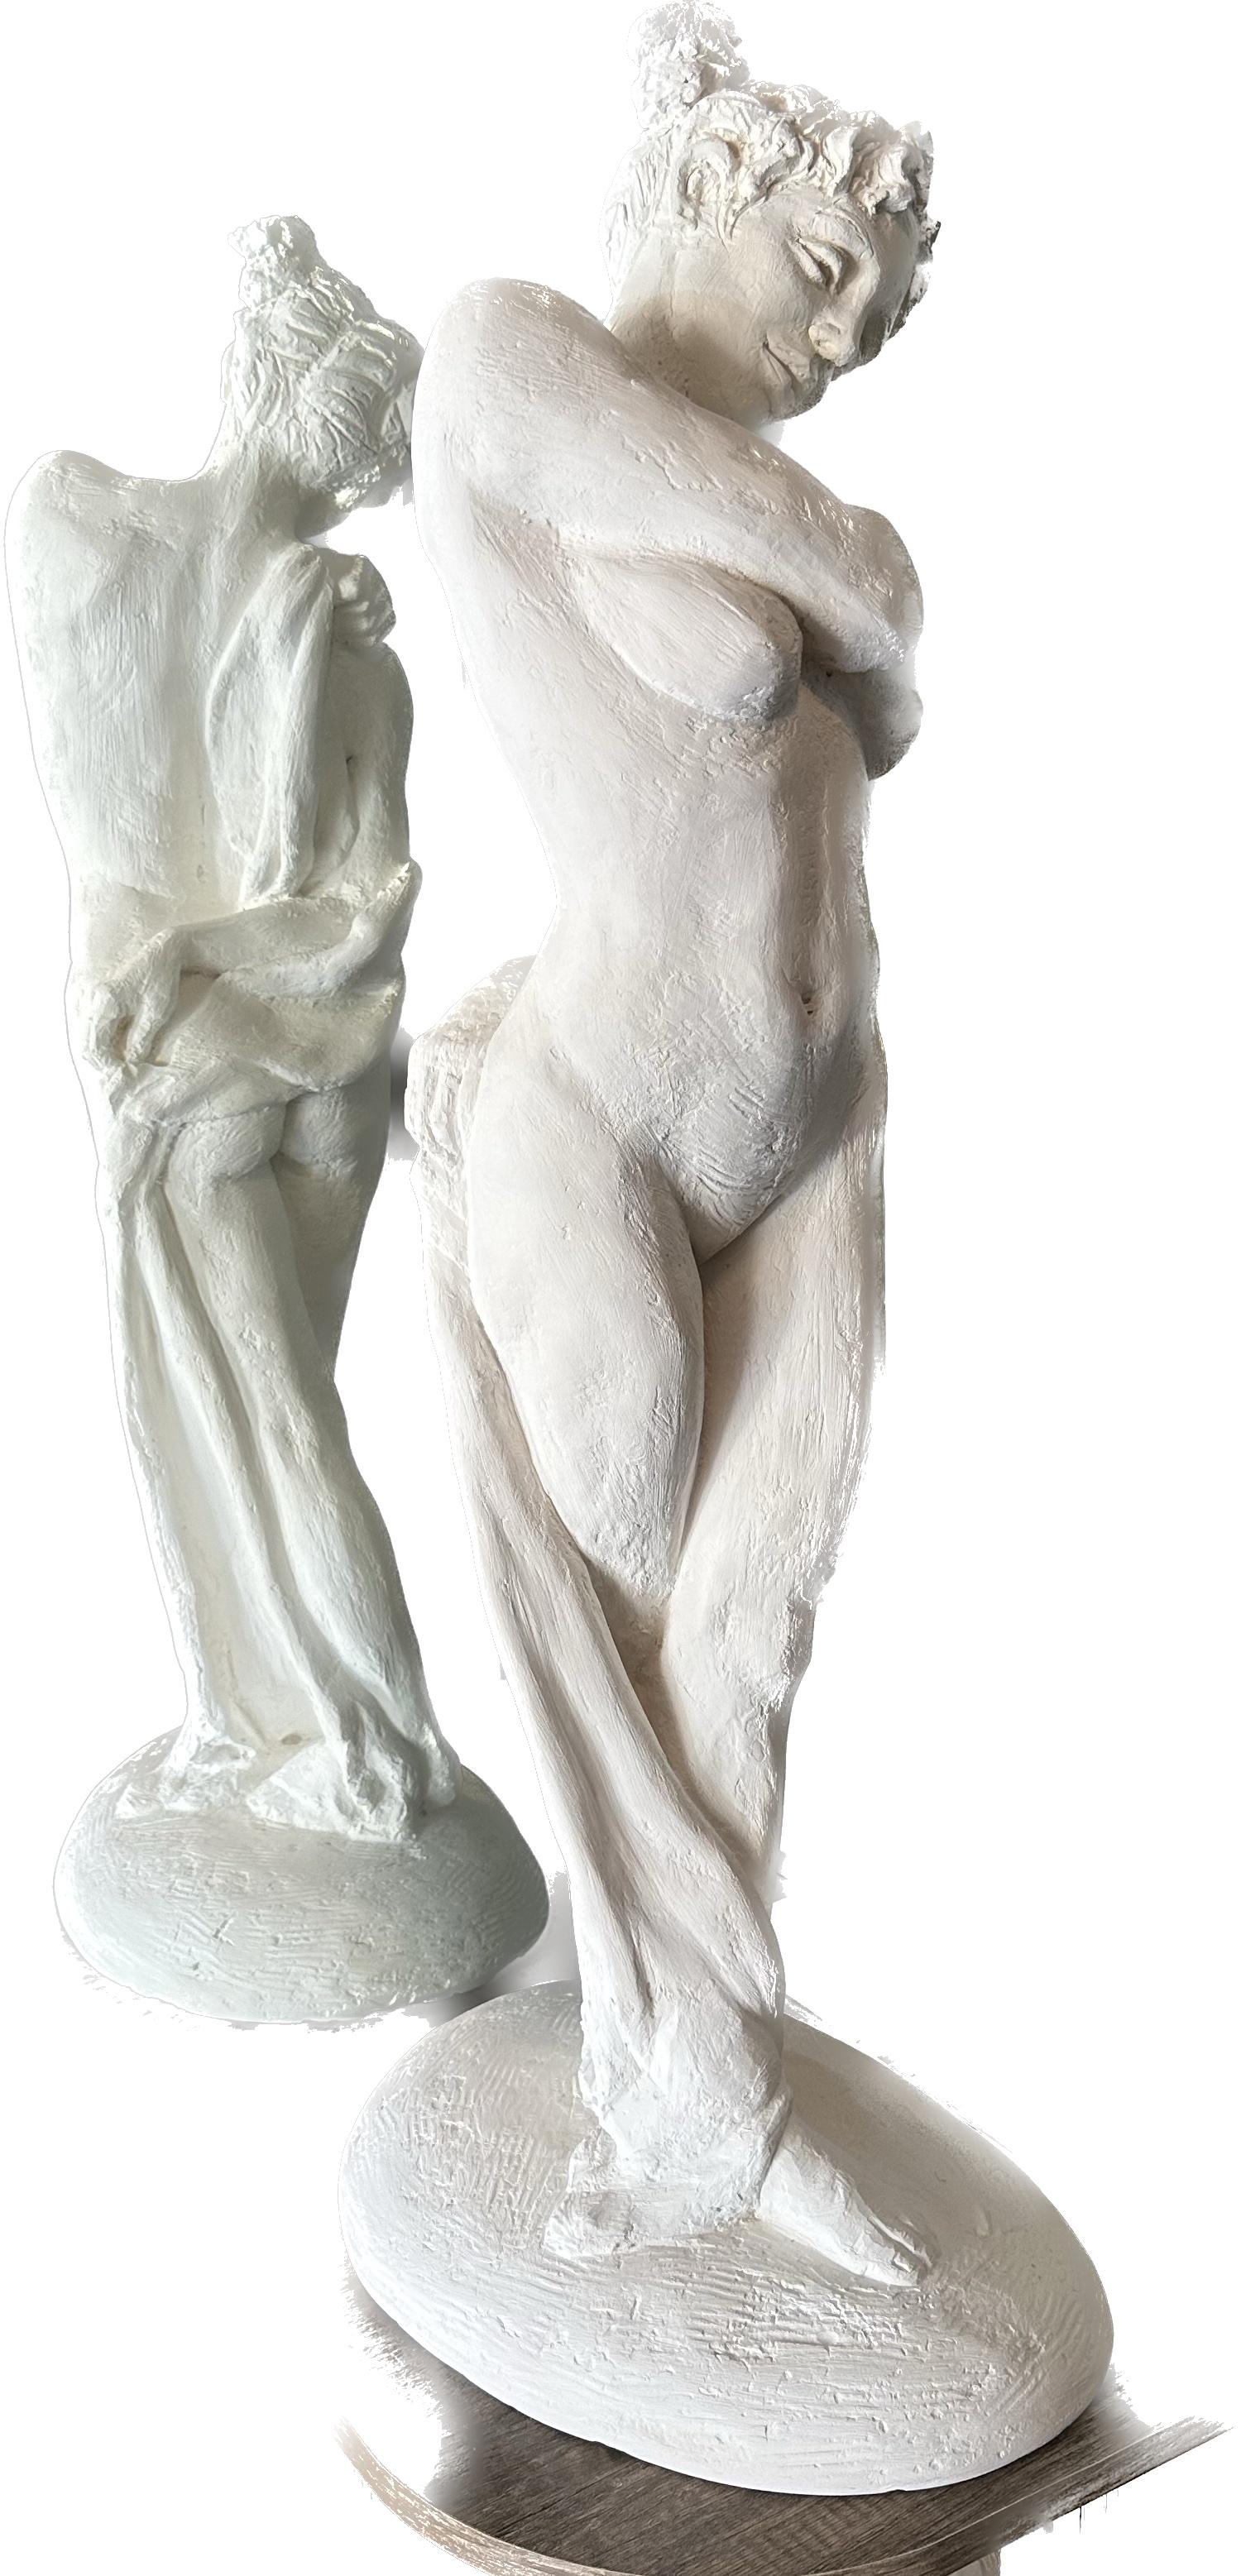 Artist:  (Garo) Karapet Balakeseryan  
Medium: Hydro Stone, Dust Marble, One of a Kind 
Year: 2023
Style: Classic, Impressionism, 
Subject: Standing Nude,
Size: 32